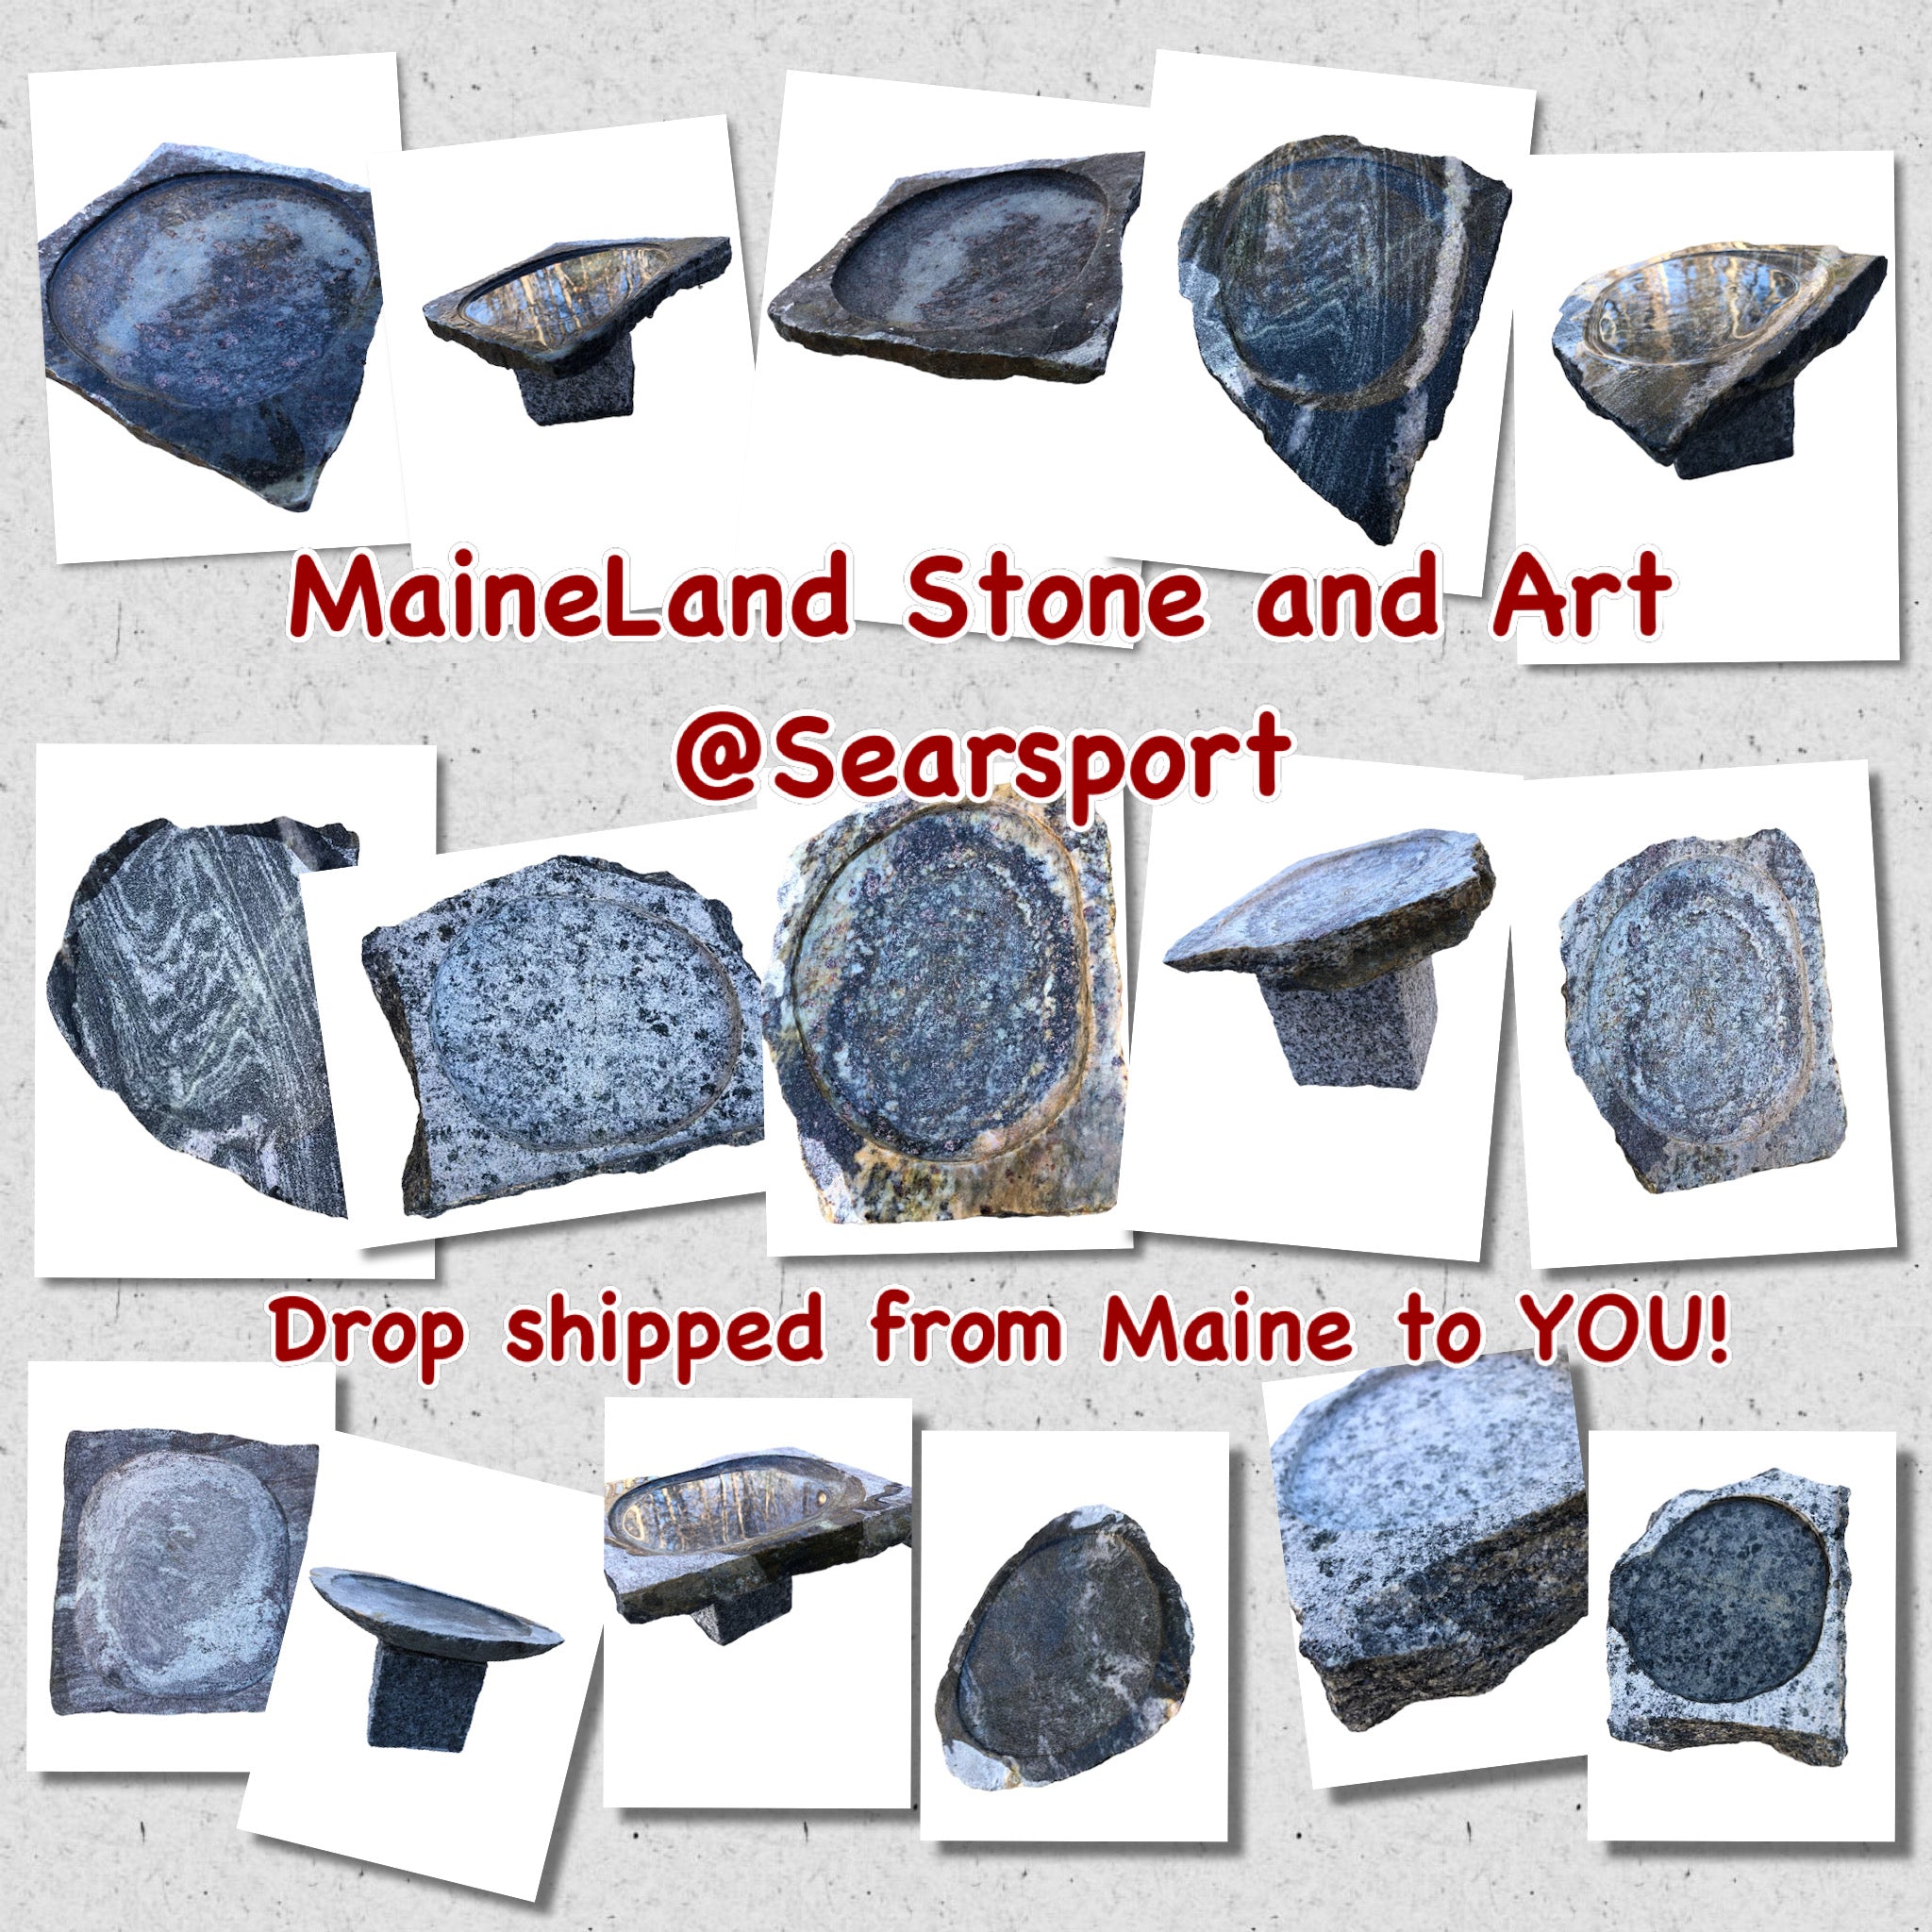 MaineLand Stone and Art